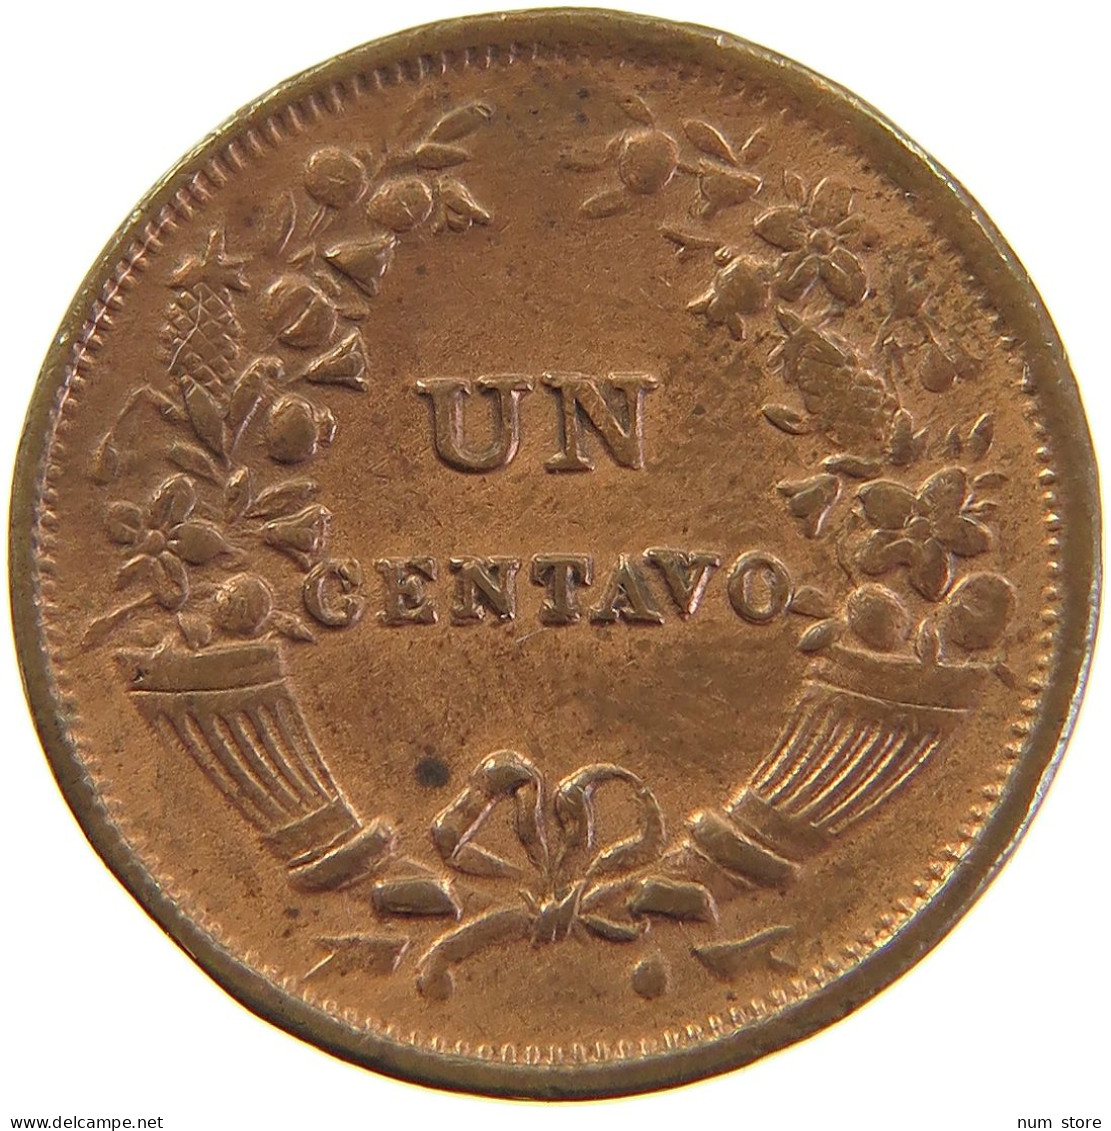 PERU CENTAVO 1941 THICK PLANCHET #t030 0231 - Peru